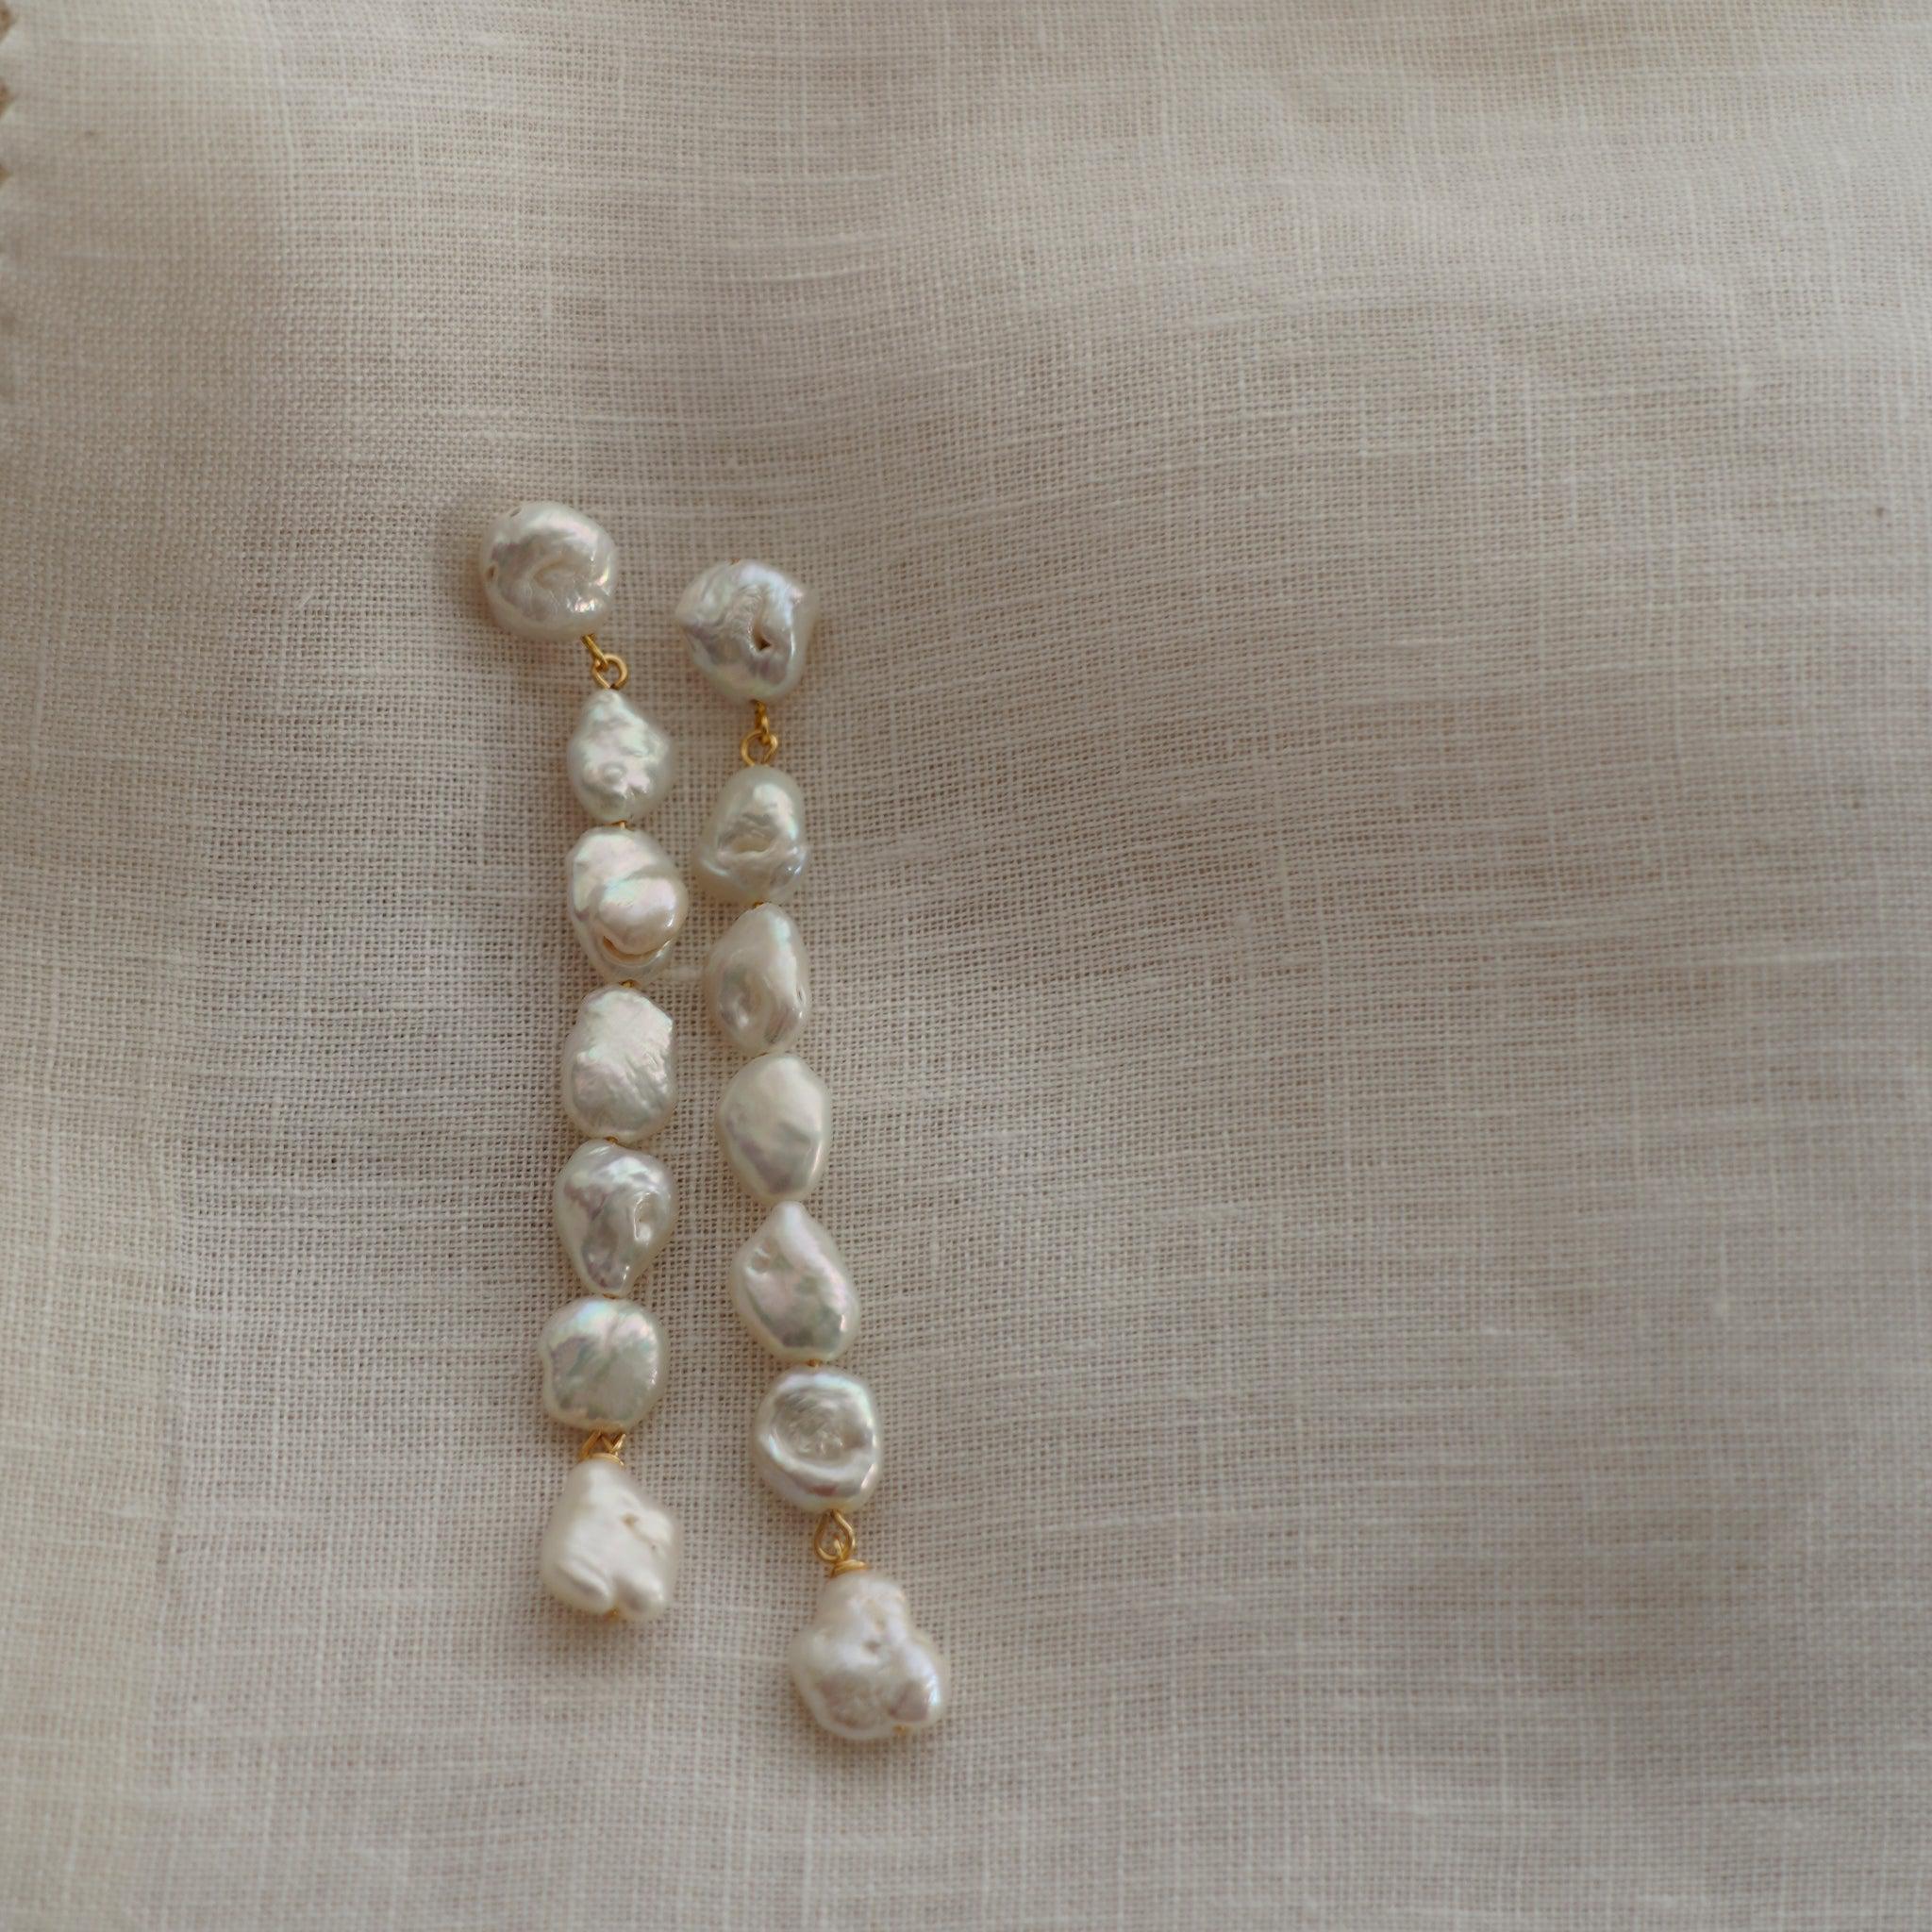 Handgefertigte lange Perlenohrringe